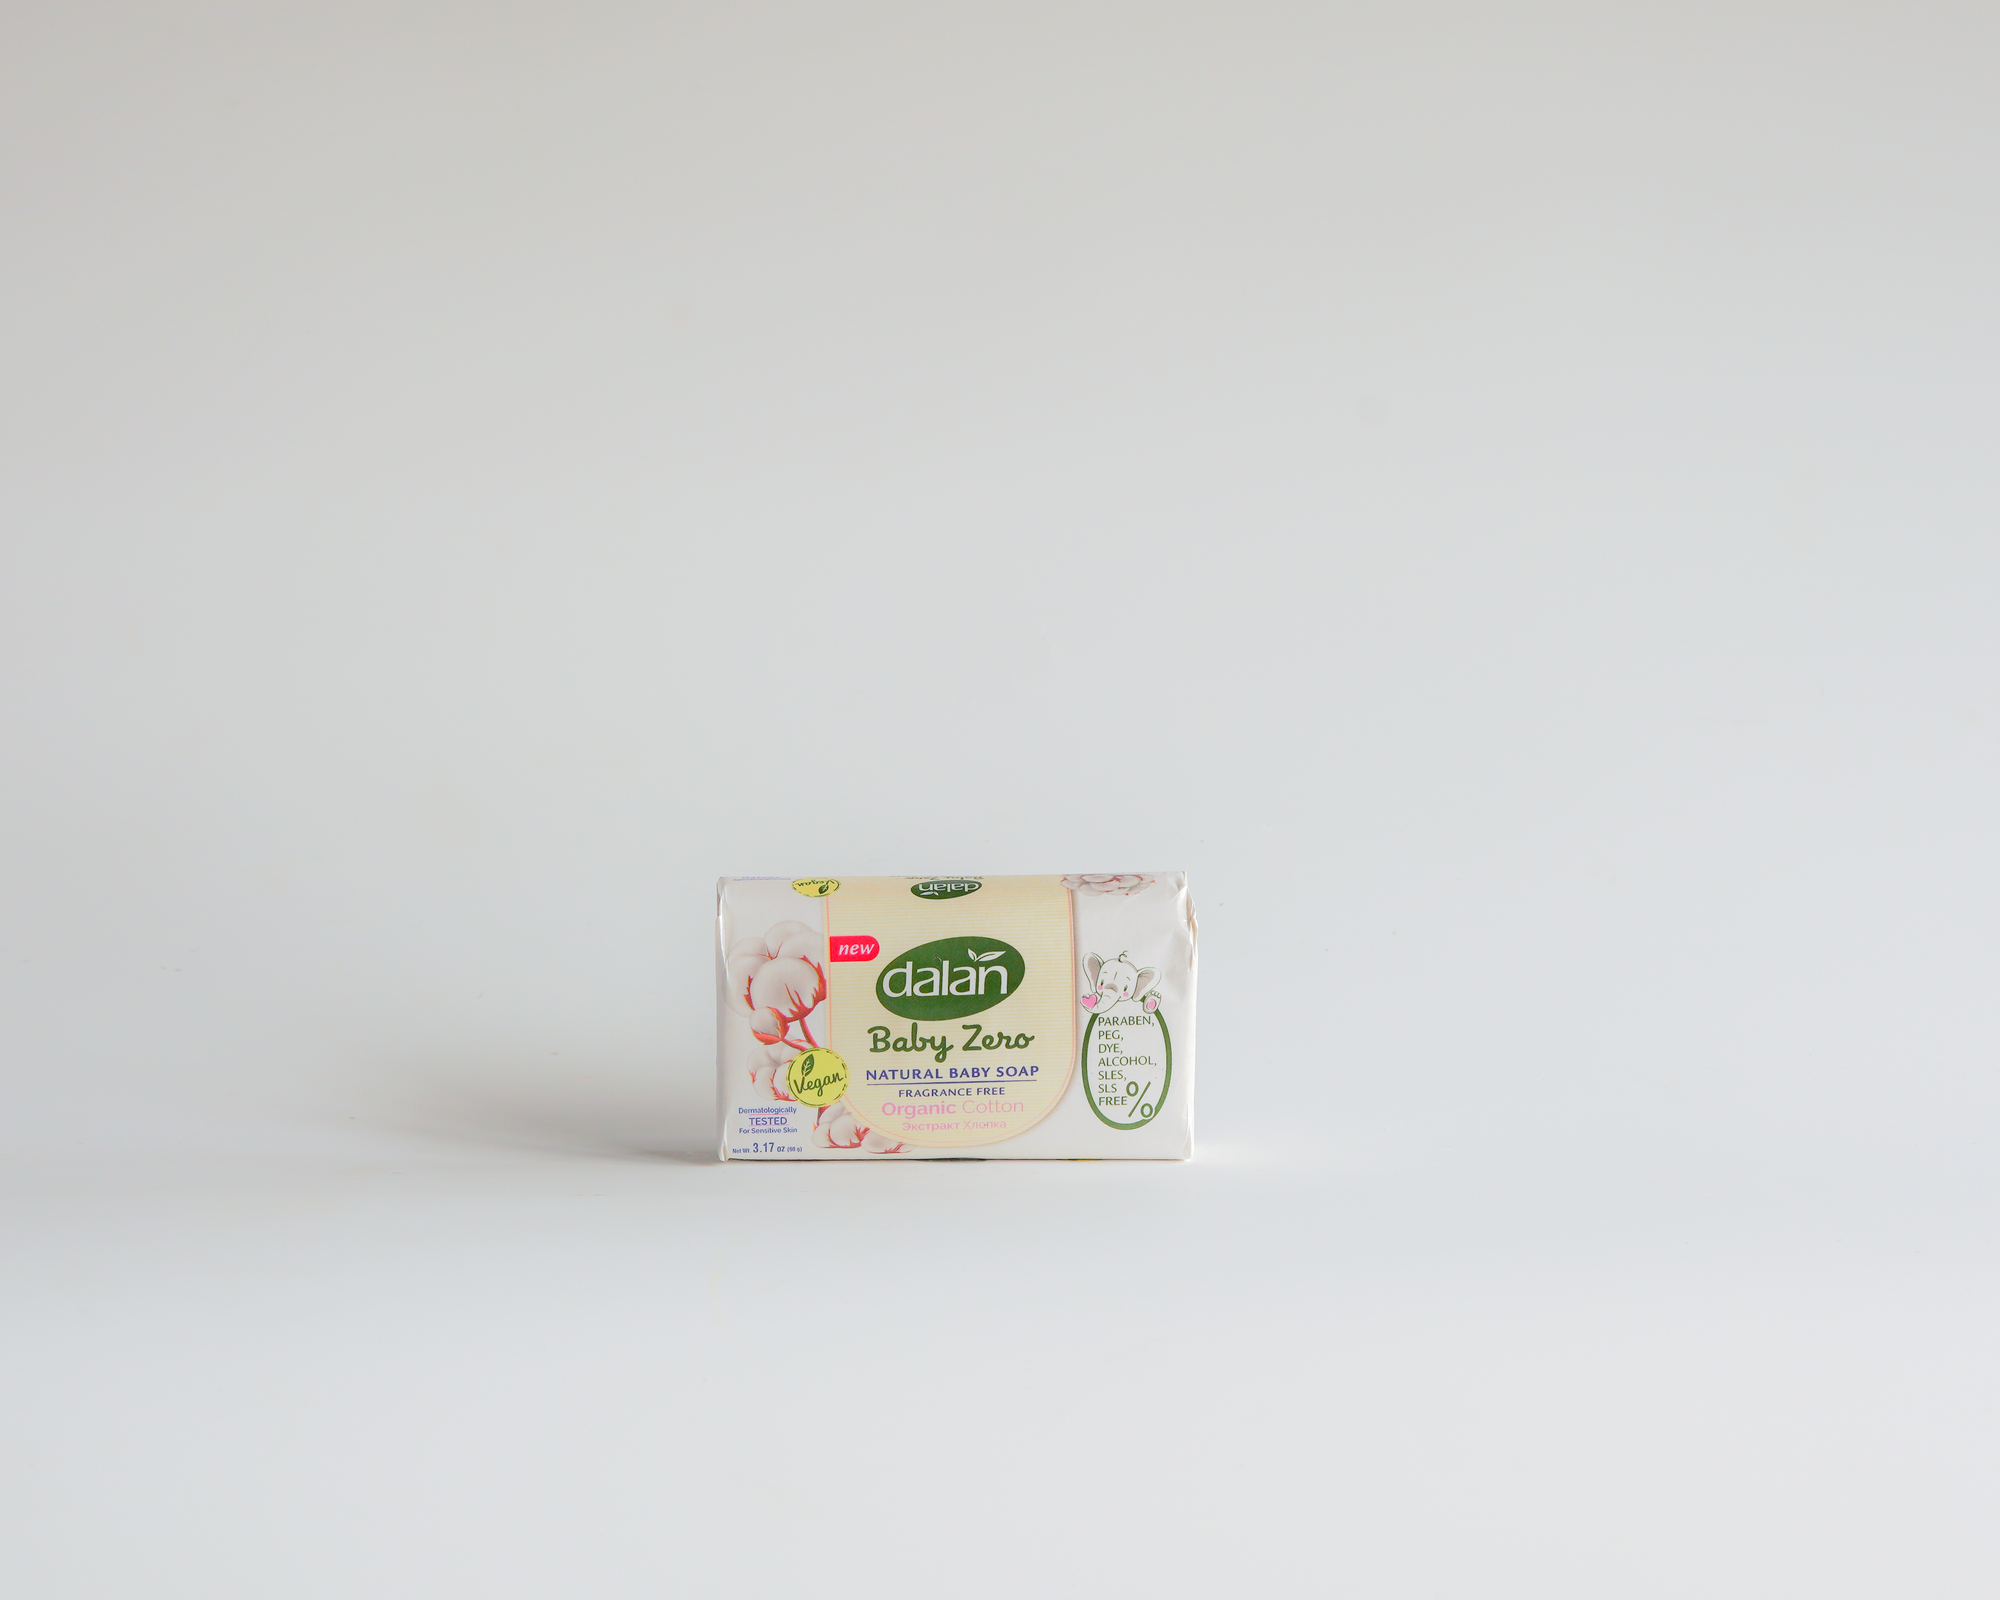 Dalan Baby Zero Organic Cotton Soap 90g